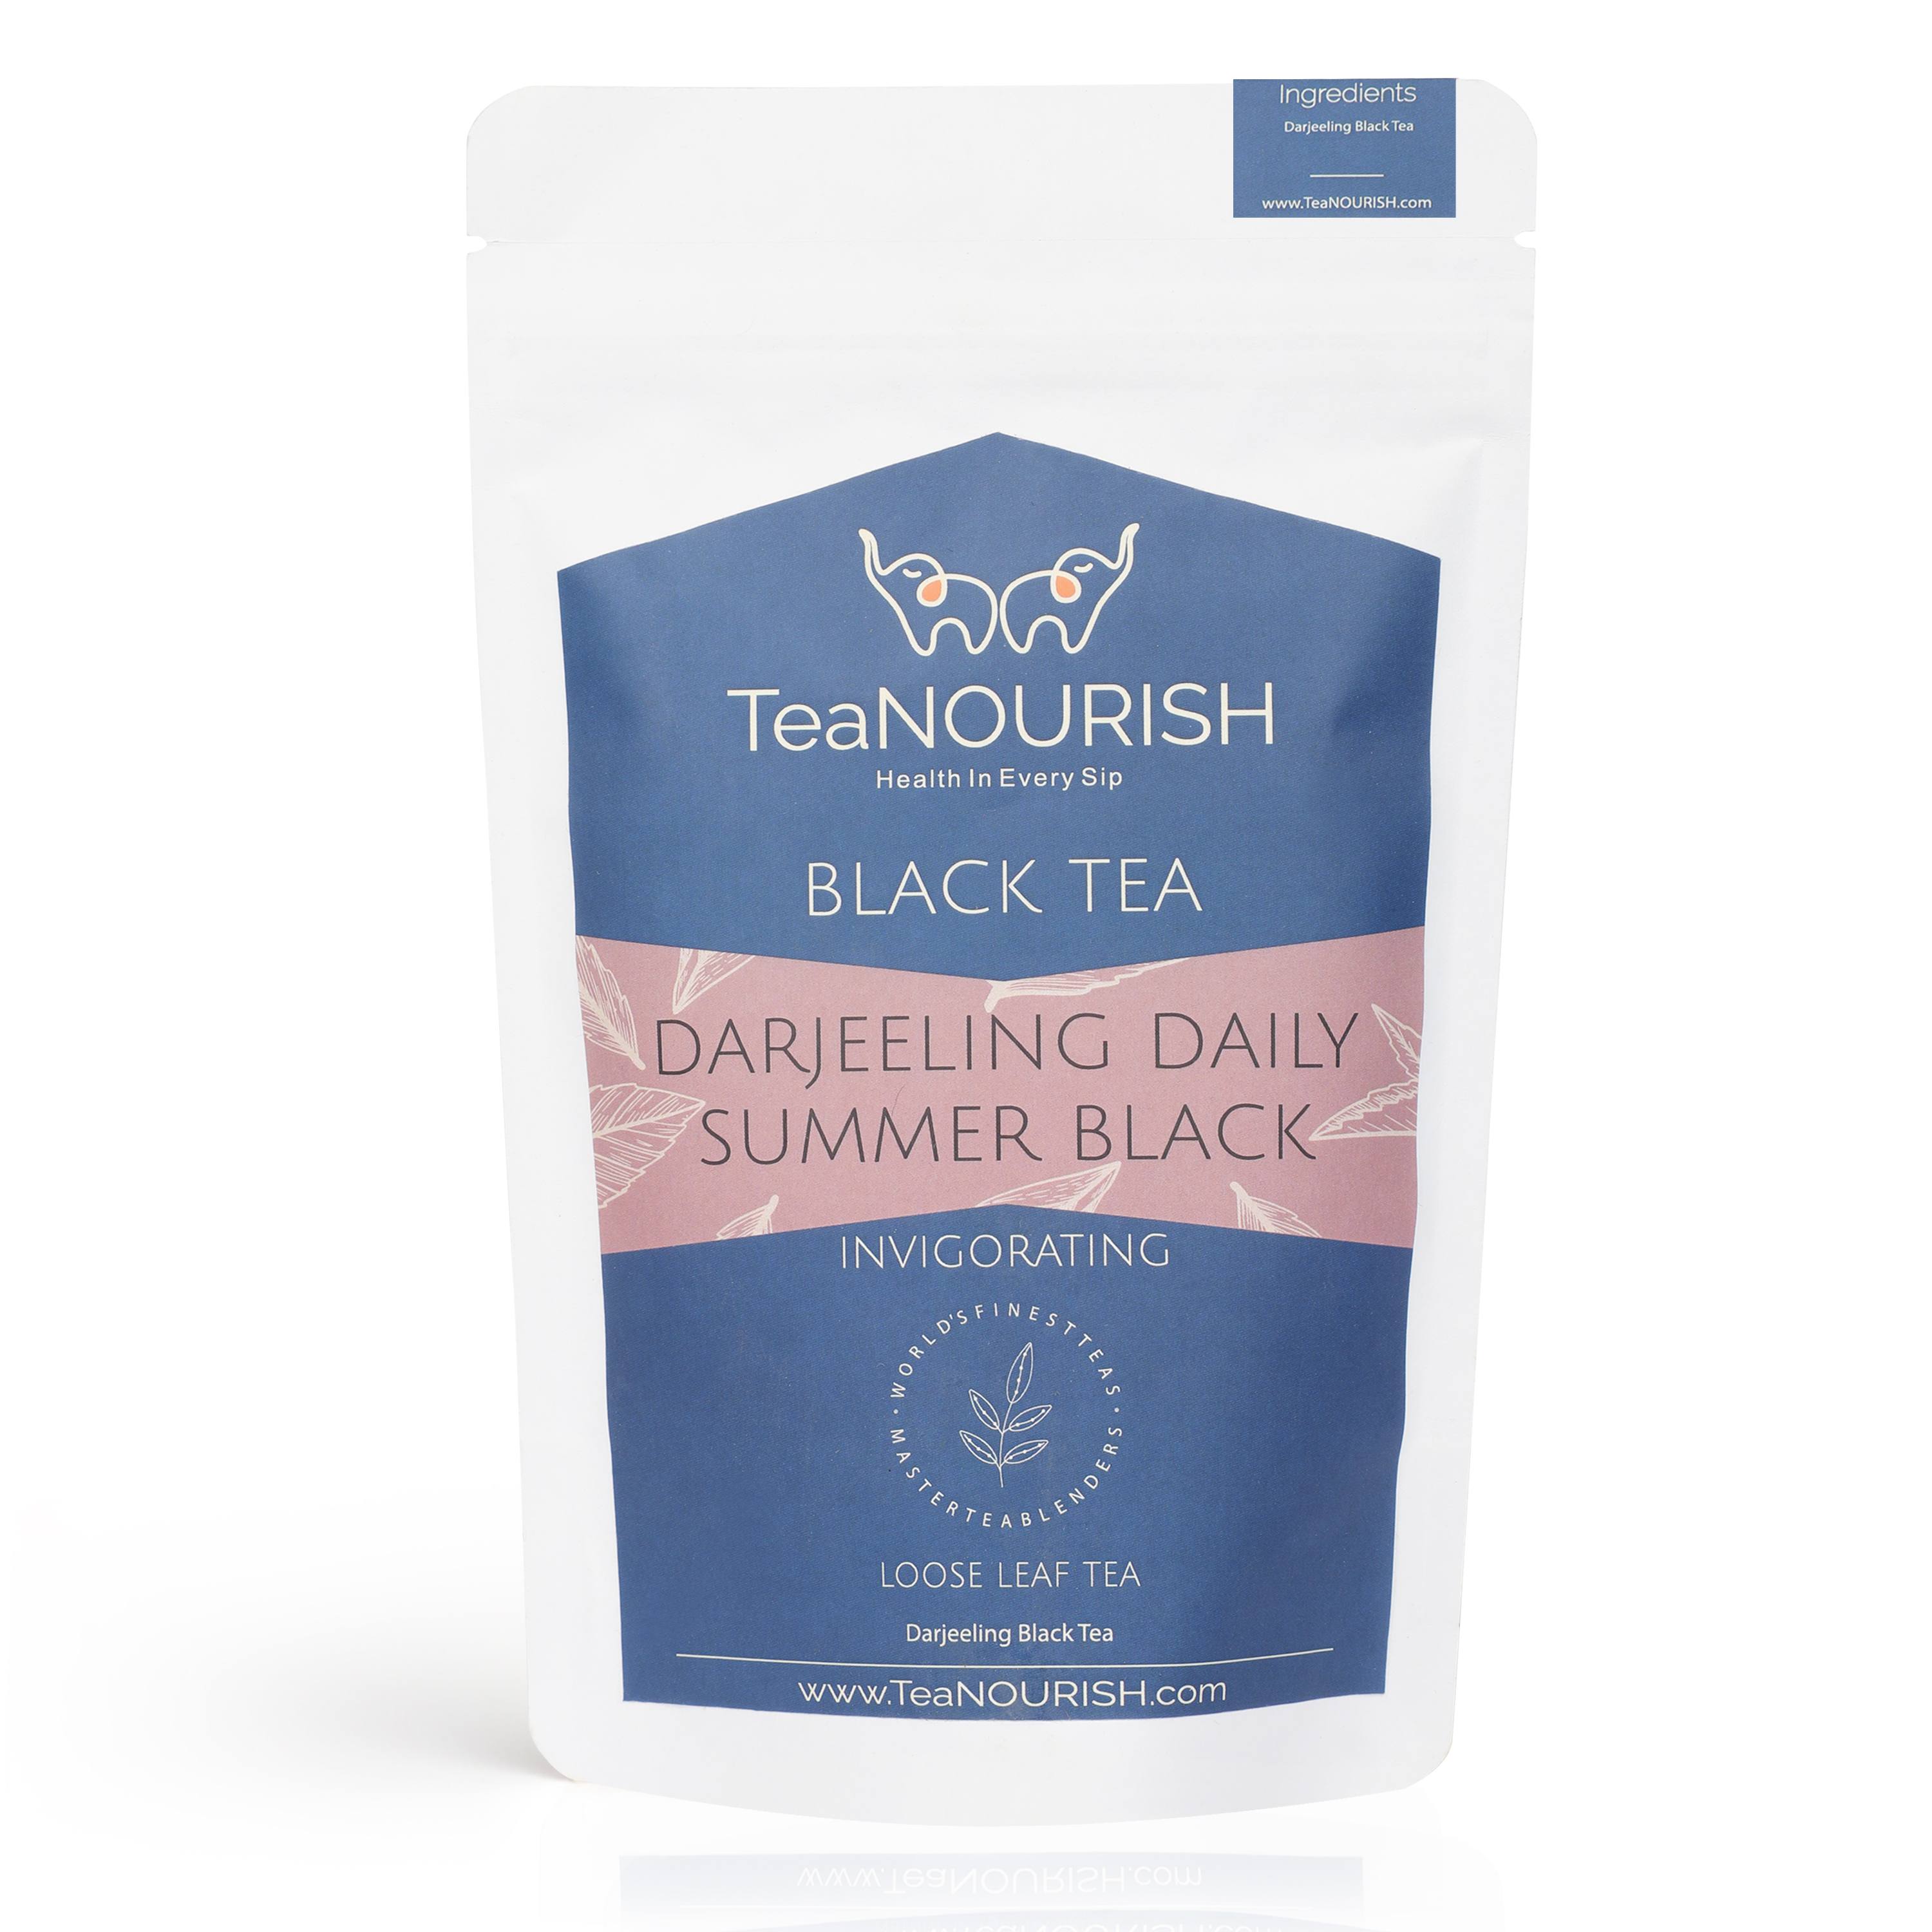 Teanourish Darjeeling Daily Summer Black Tea